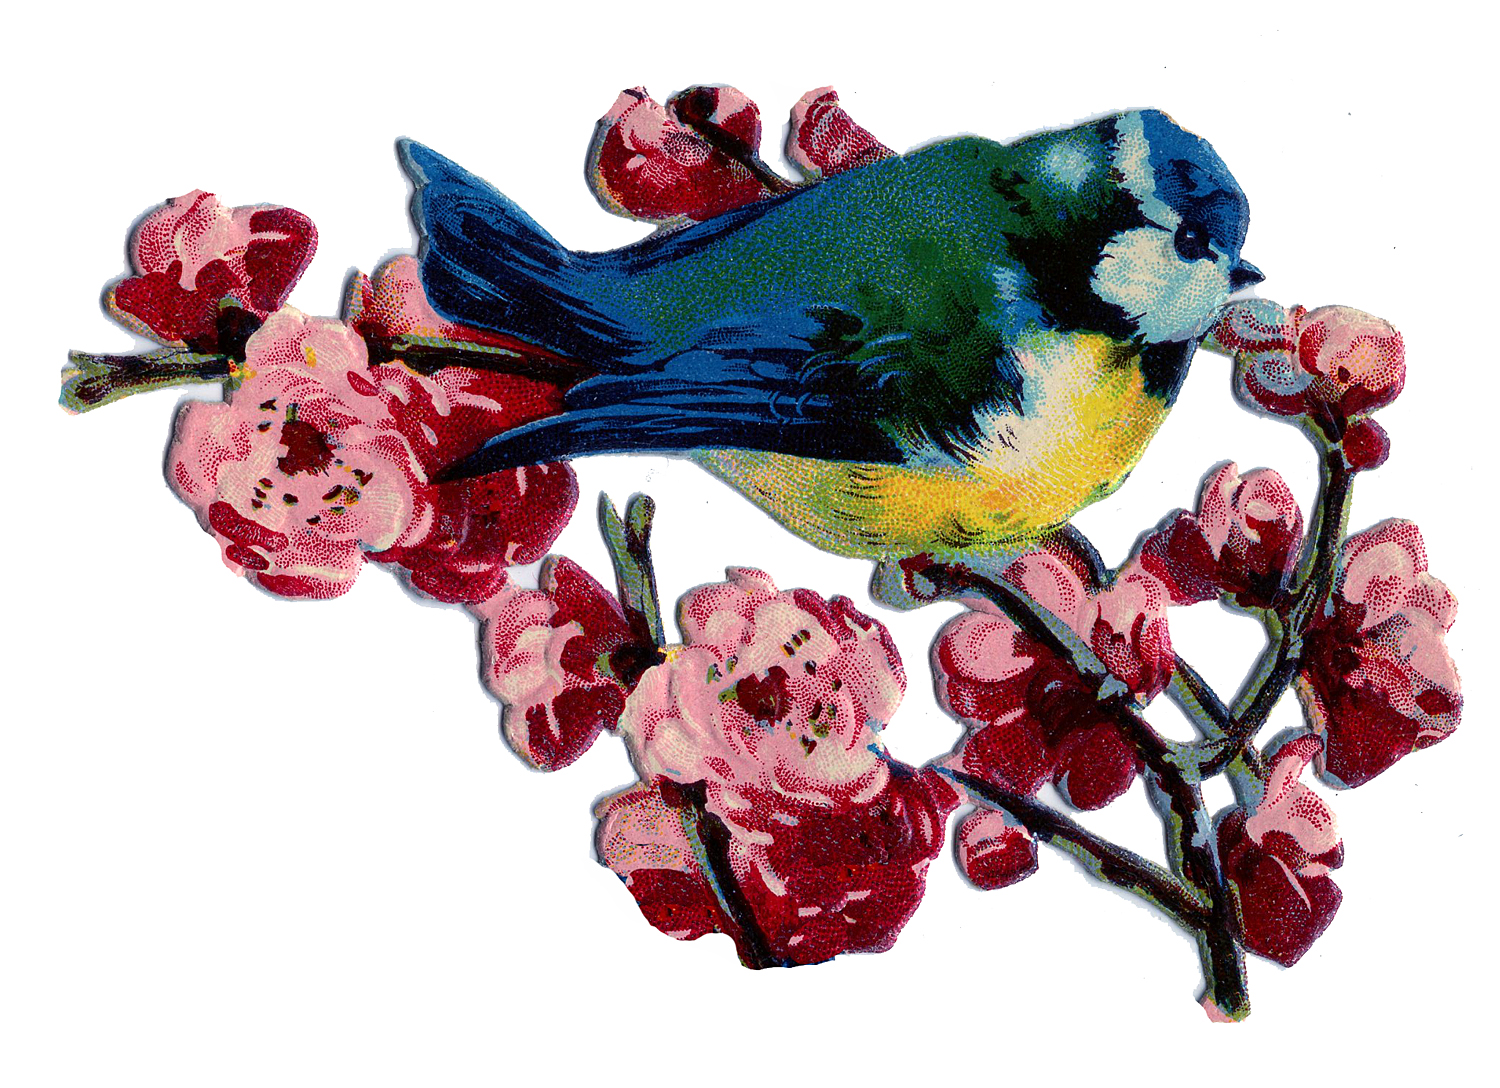 http://thegraphicsfairy.com/wp-content/uploads/blogger/-PkqLCfUFBP4/T7KsDV0DPeI/AAAAAAAAR20/u-u4ZAdkSSc/s1600/bluebird-blossoms-Graphics-Fairy.jpg